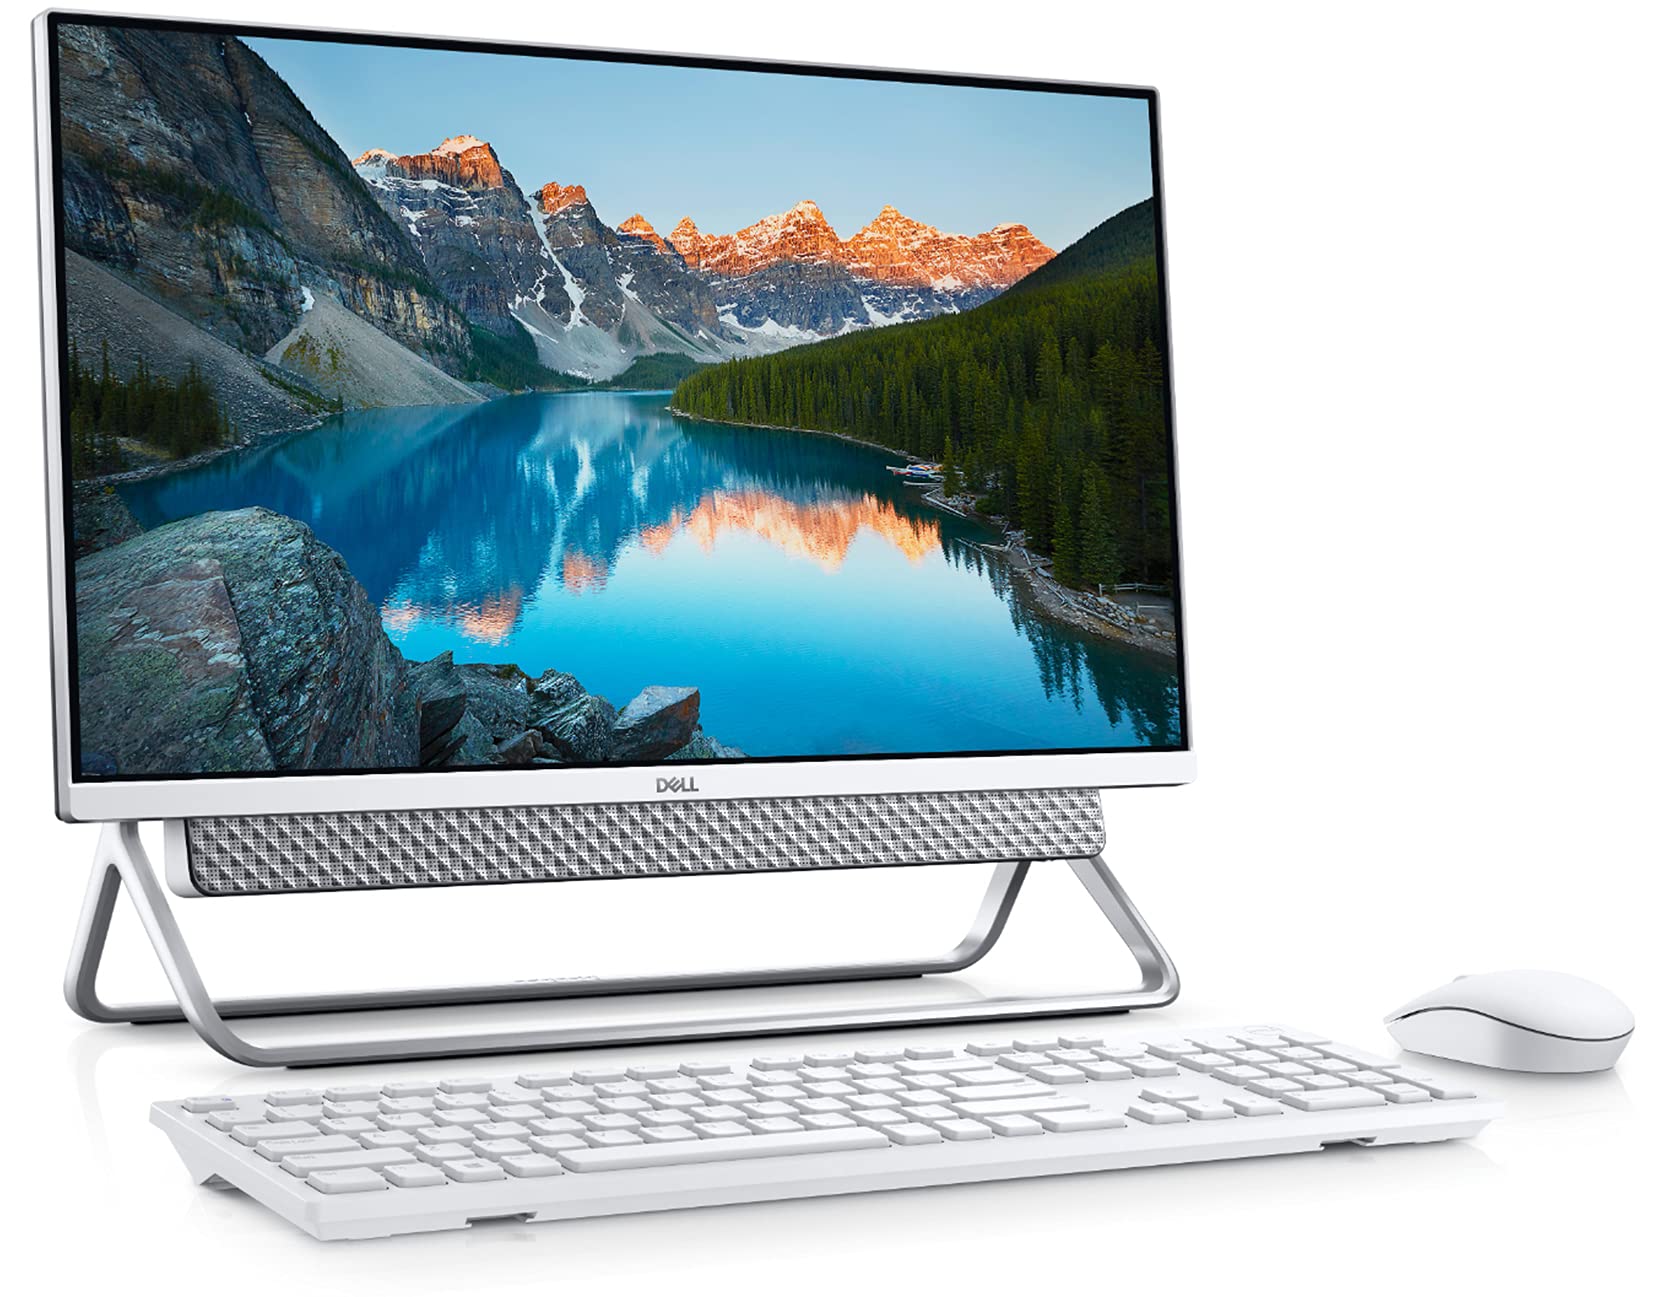 Dell Inspiron 5400 All in One Desktop Computer, 23.8” FHD Touchscreen, Intel 11th Gen i5-1135G7 Upto 4.2GHz, 8GB RAM, 256GB NVMe SSD, Webcam, HDMI, SD-Card, USB Type-C - Windows 10 Pro (Renewed)